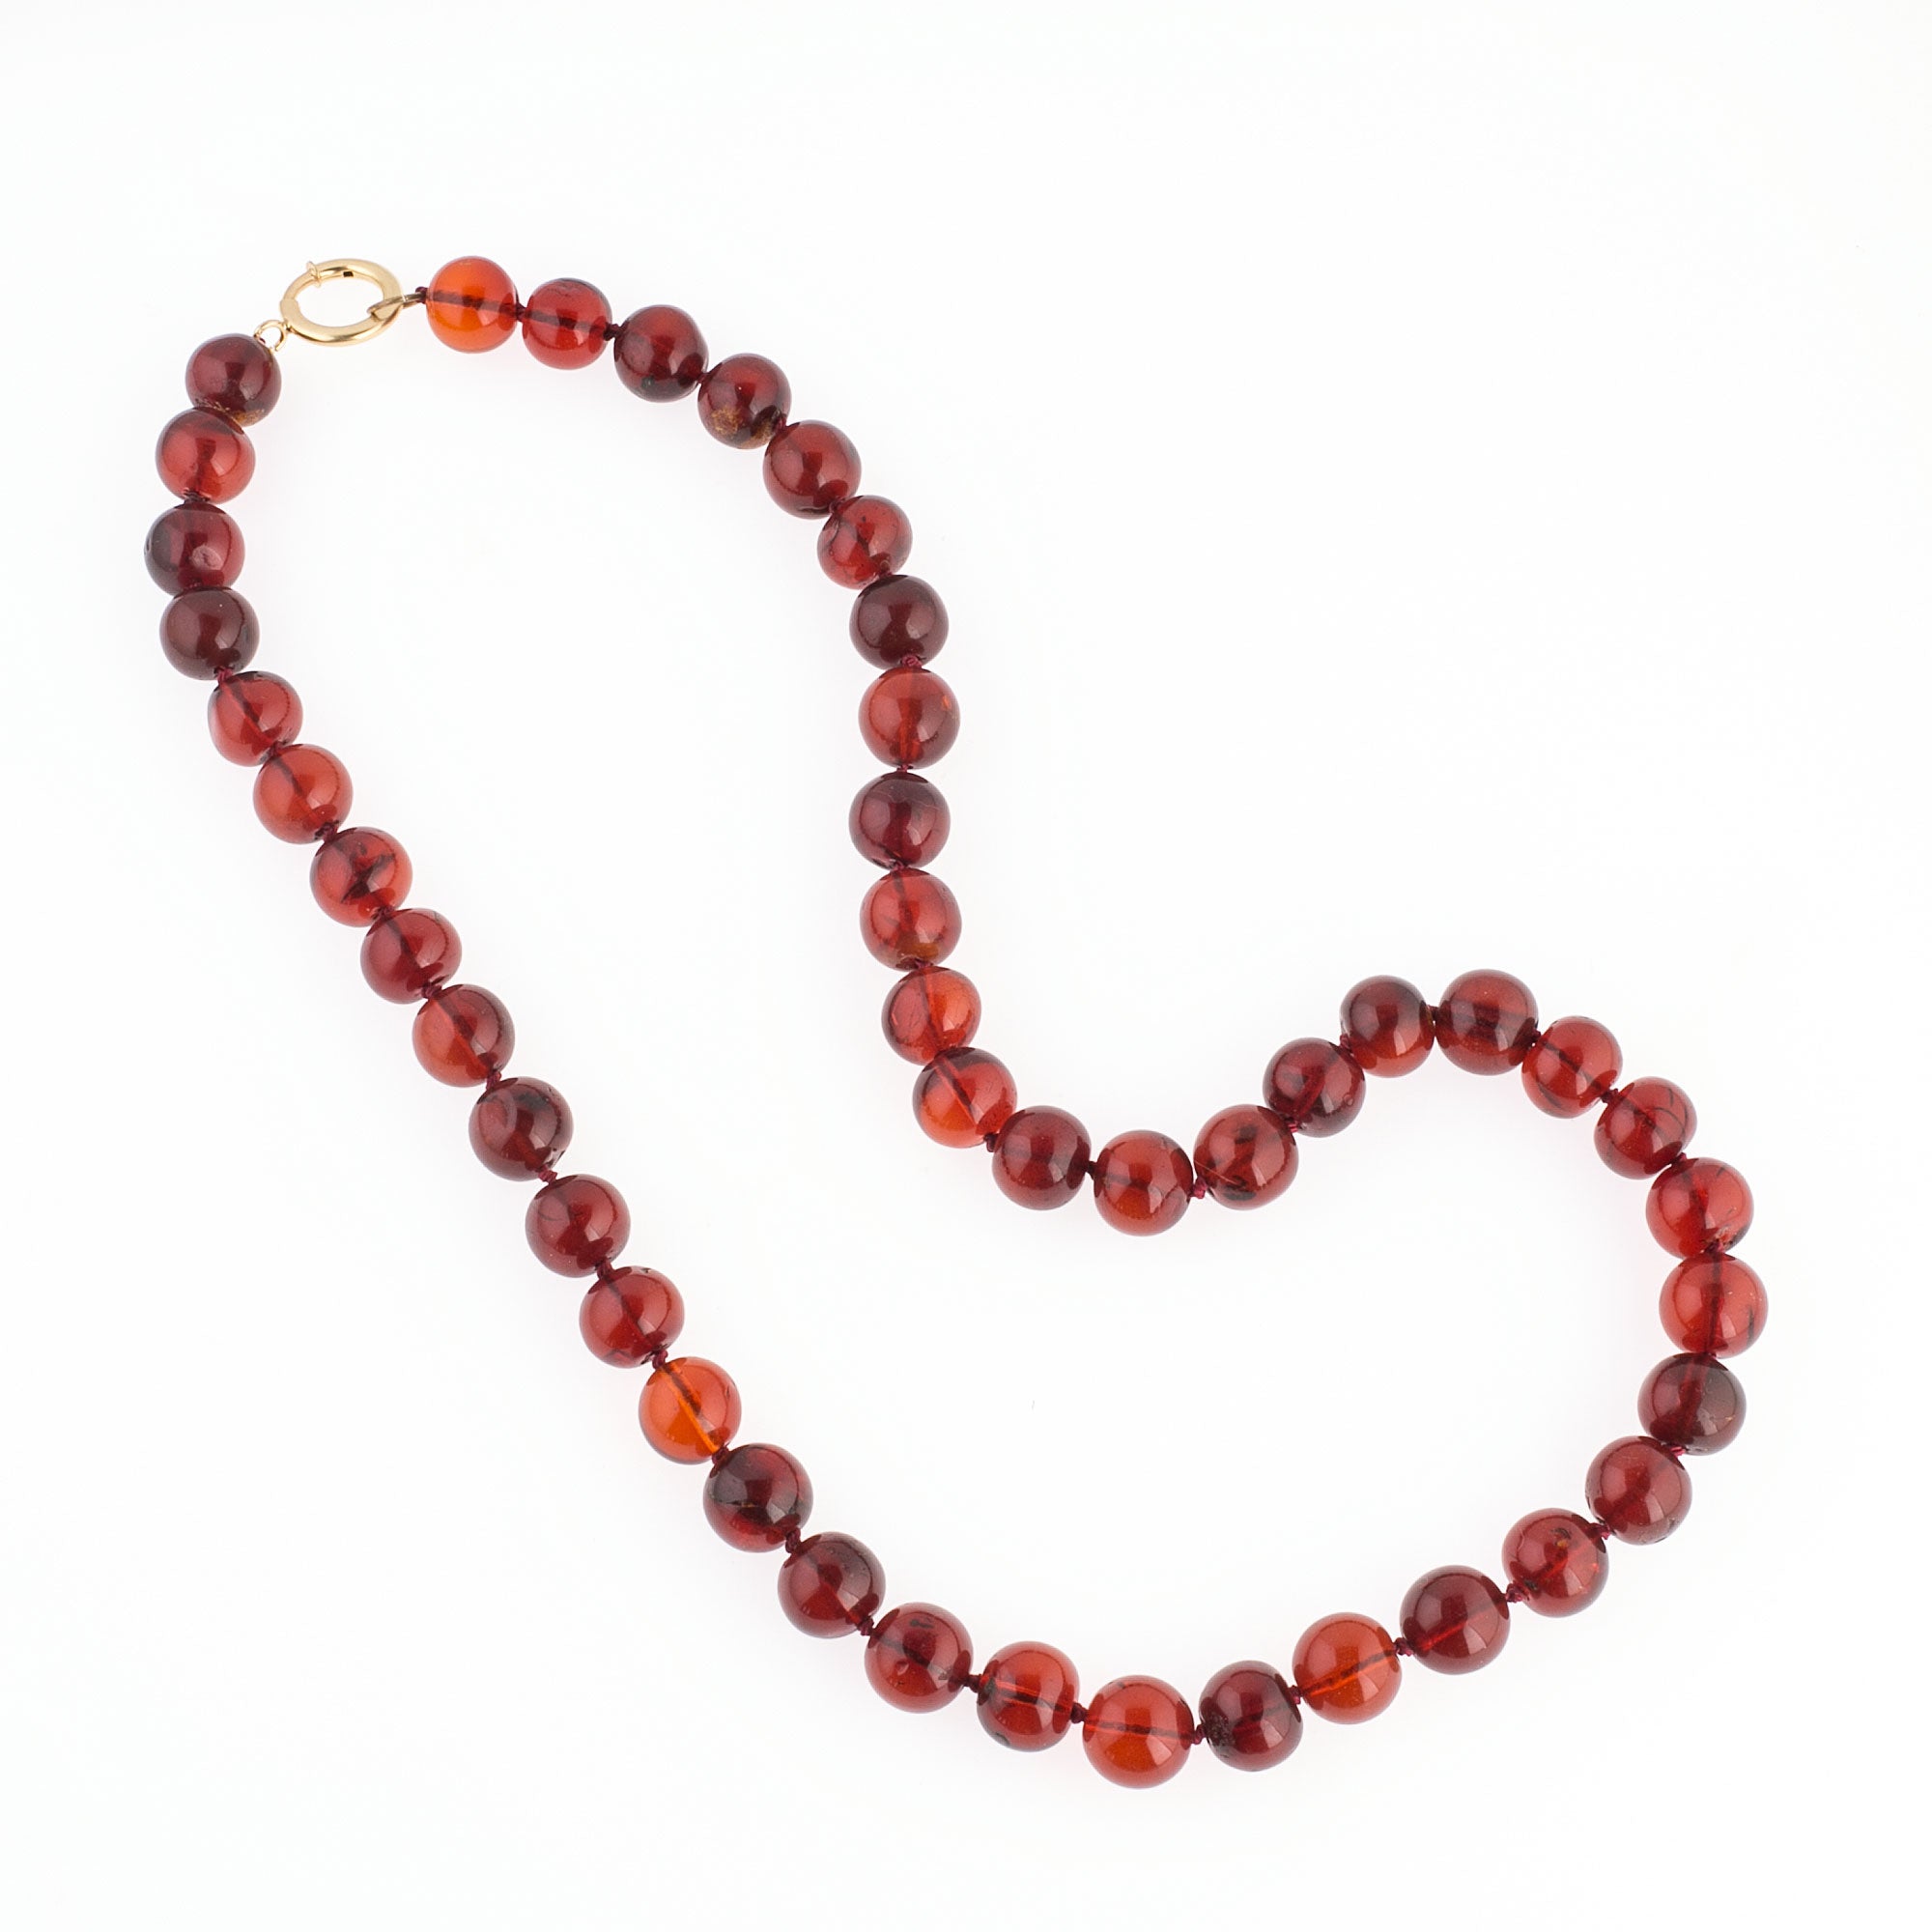 Necklace of Unique Red Amber Beads, Unique necklace